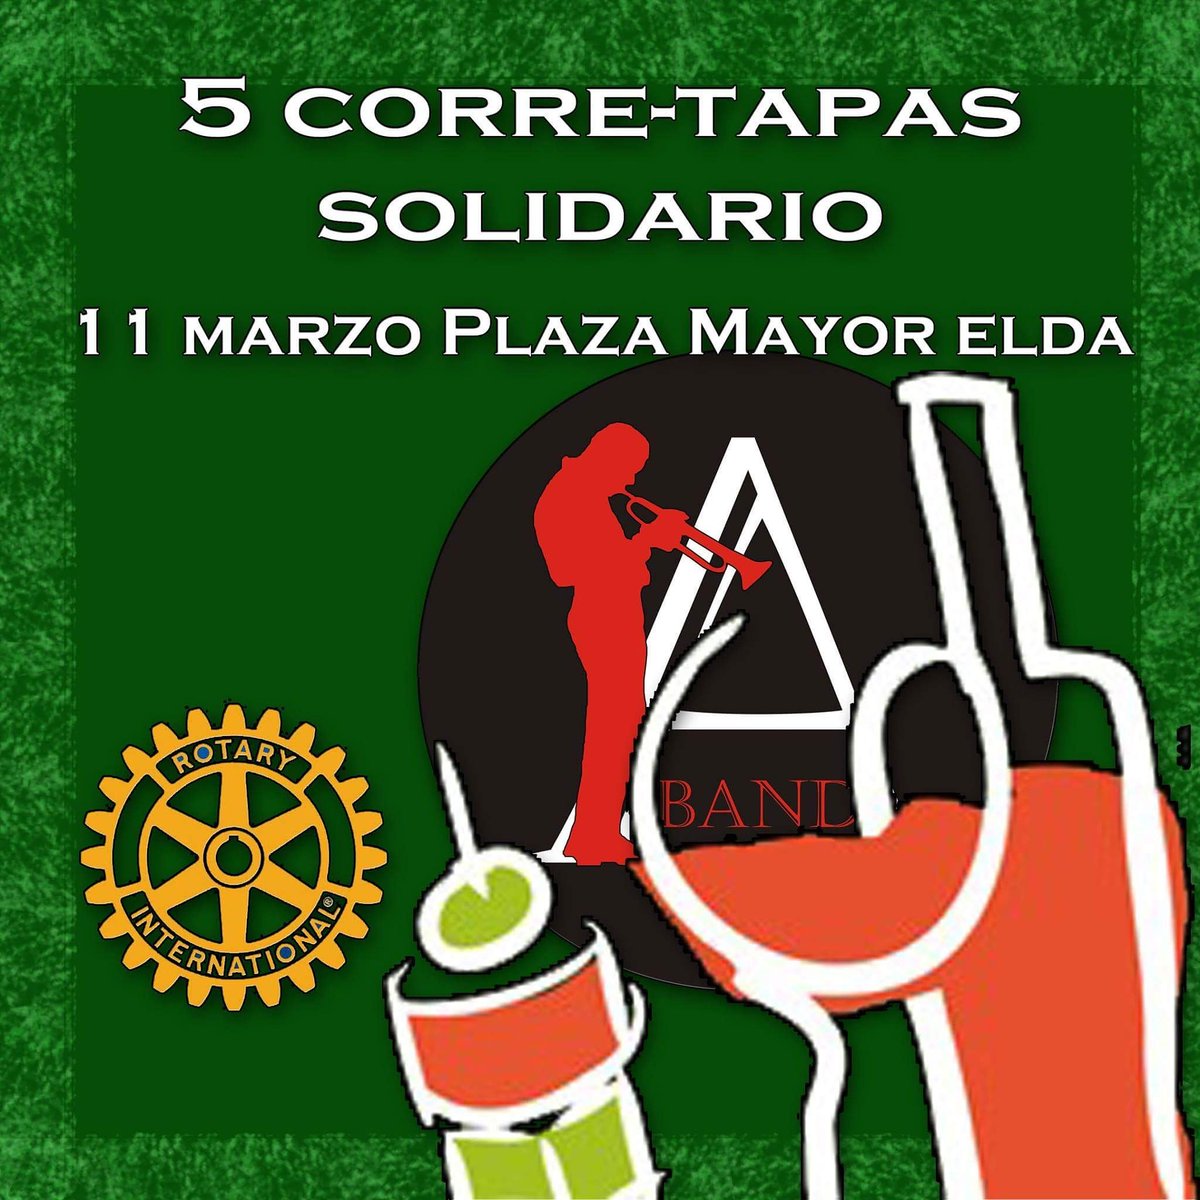 #5corretapas #solidario #rotaryElda #plazamayorelda #momentosacustic